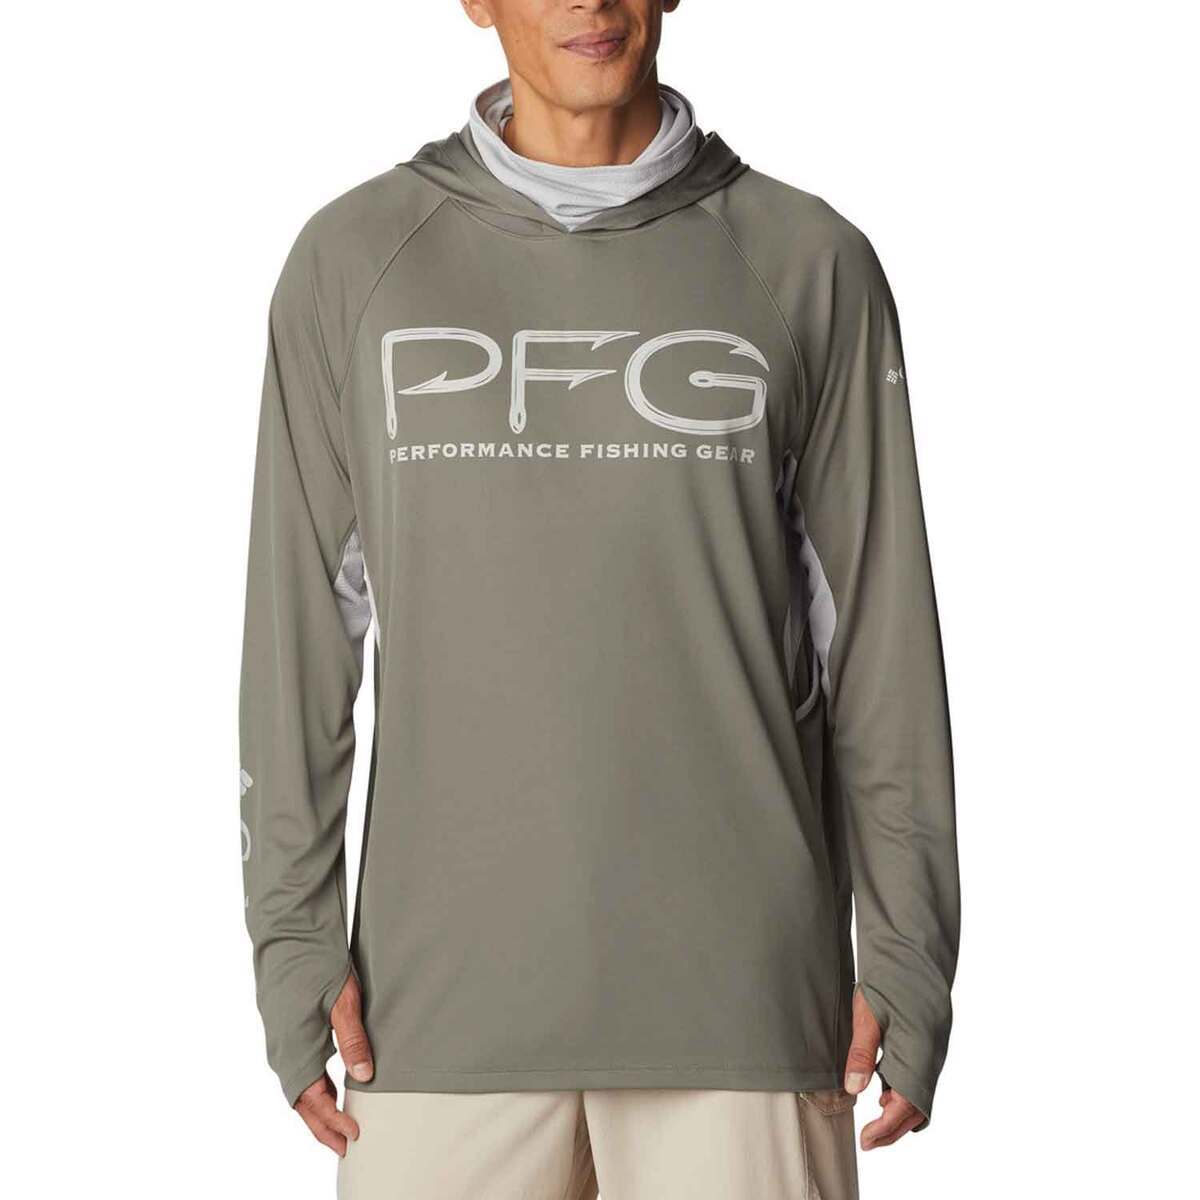 Columbia PFG Performance Fishing Gear Orange T Shirt XL